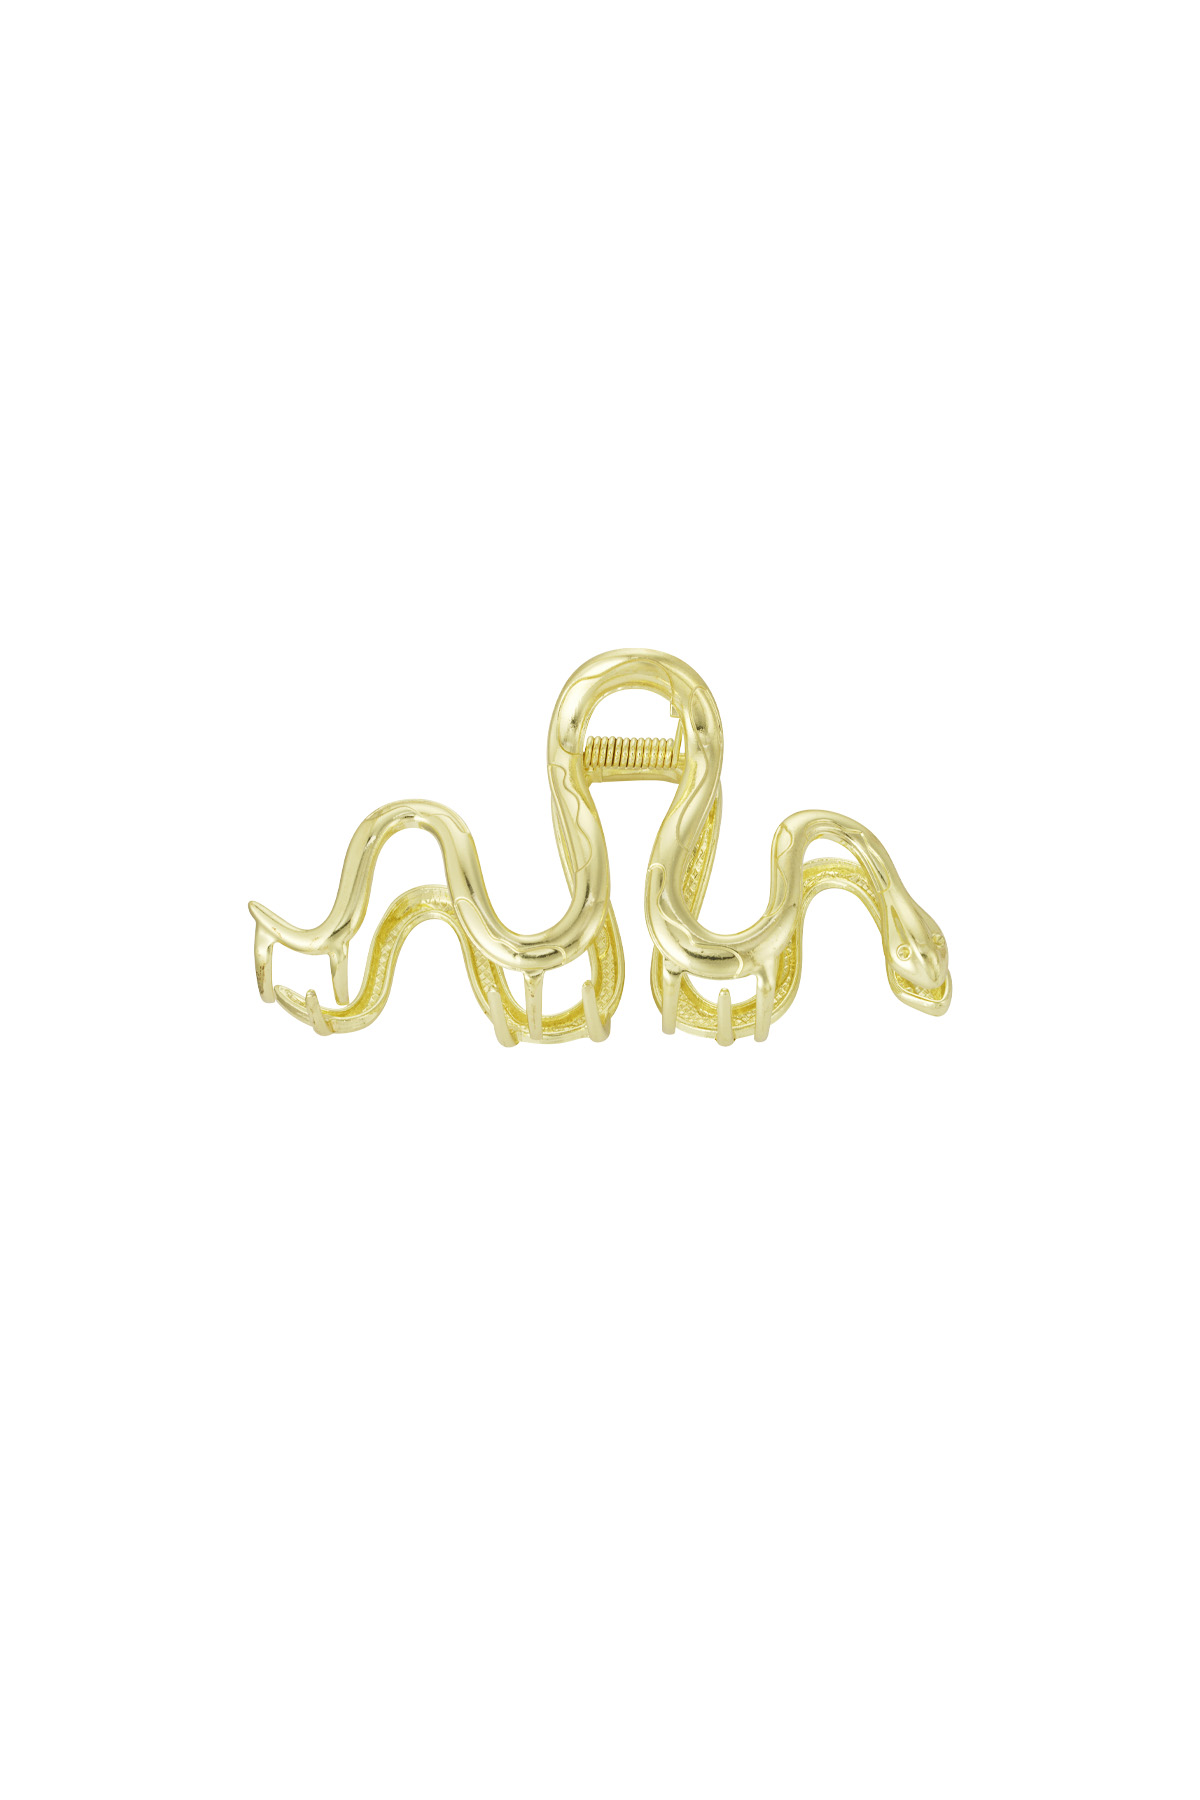 Hair clip swirly snake - gold